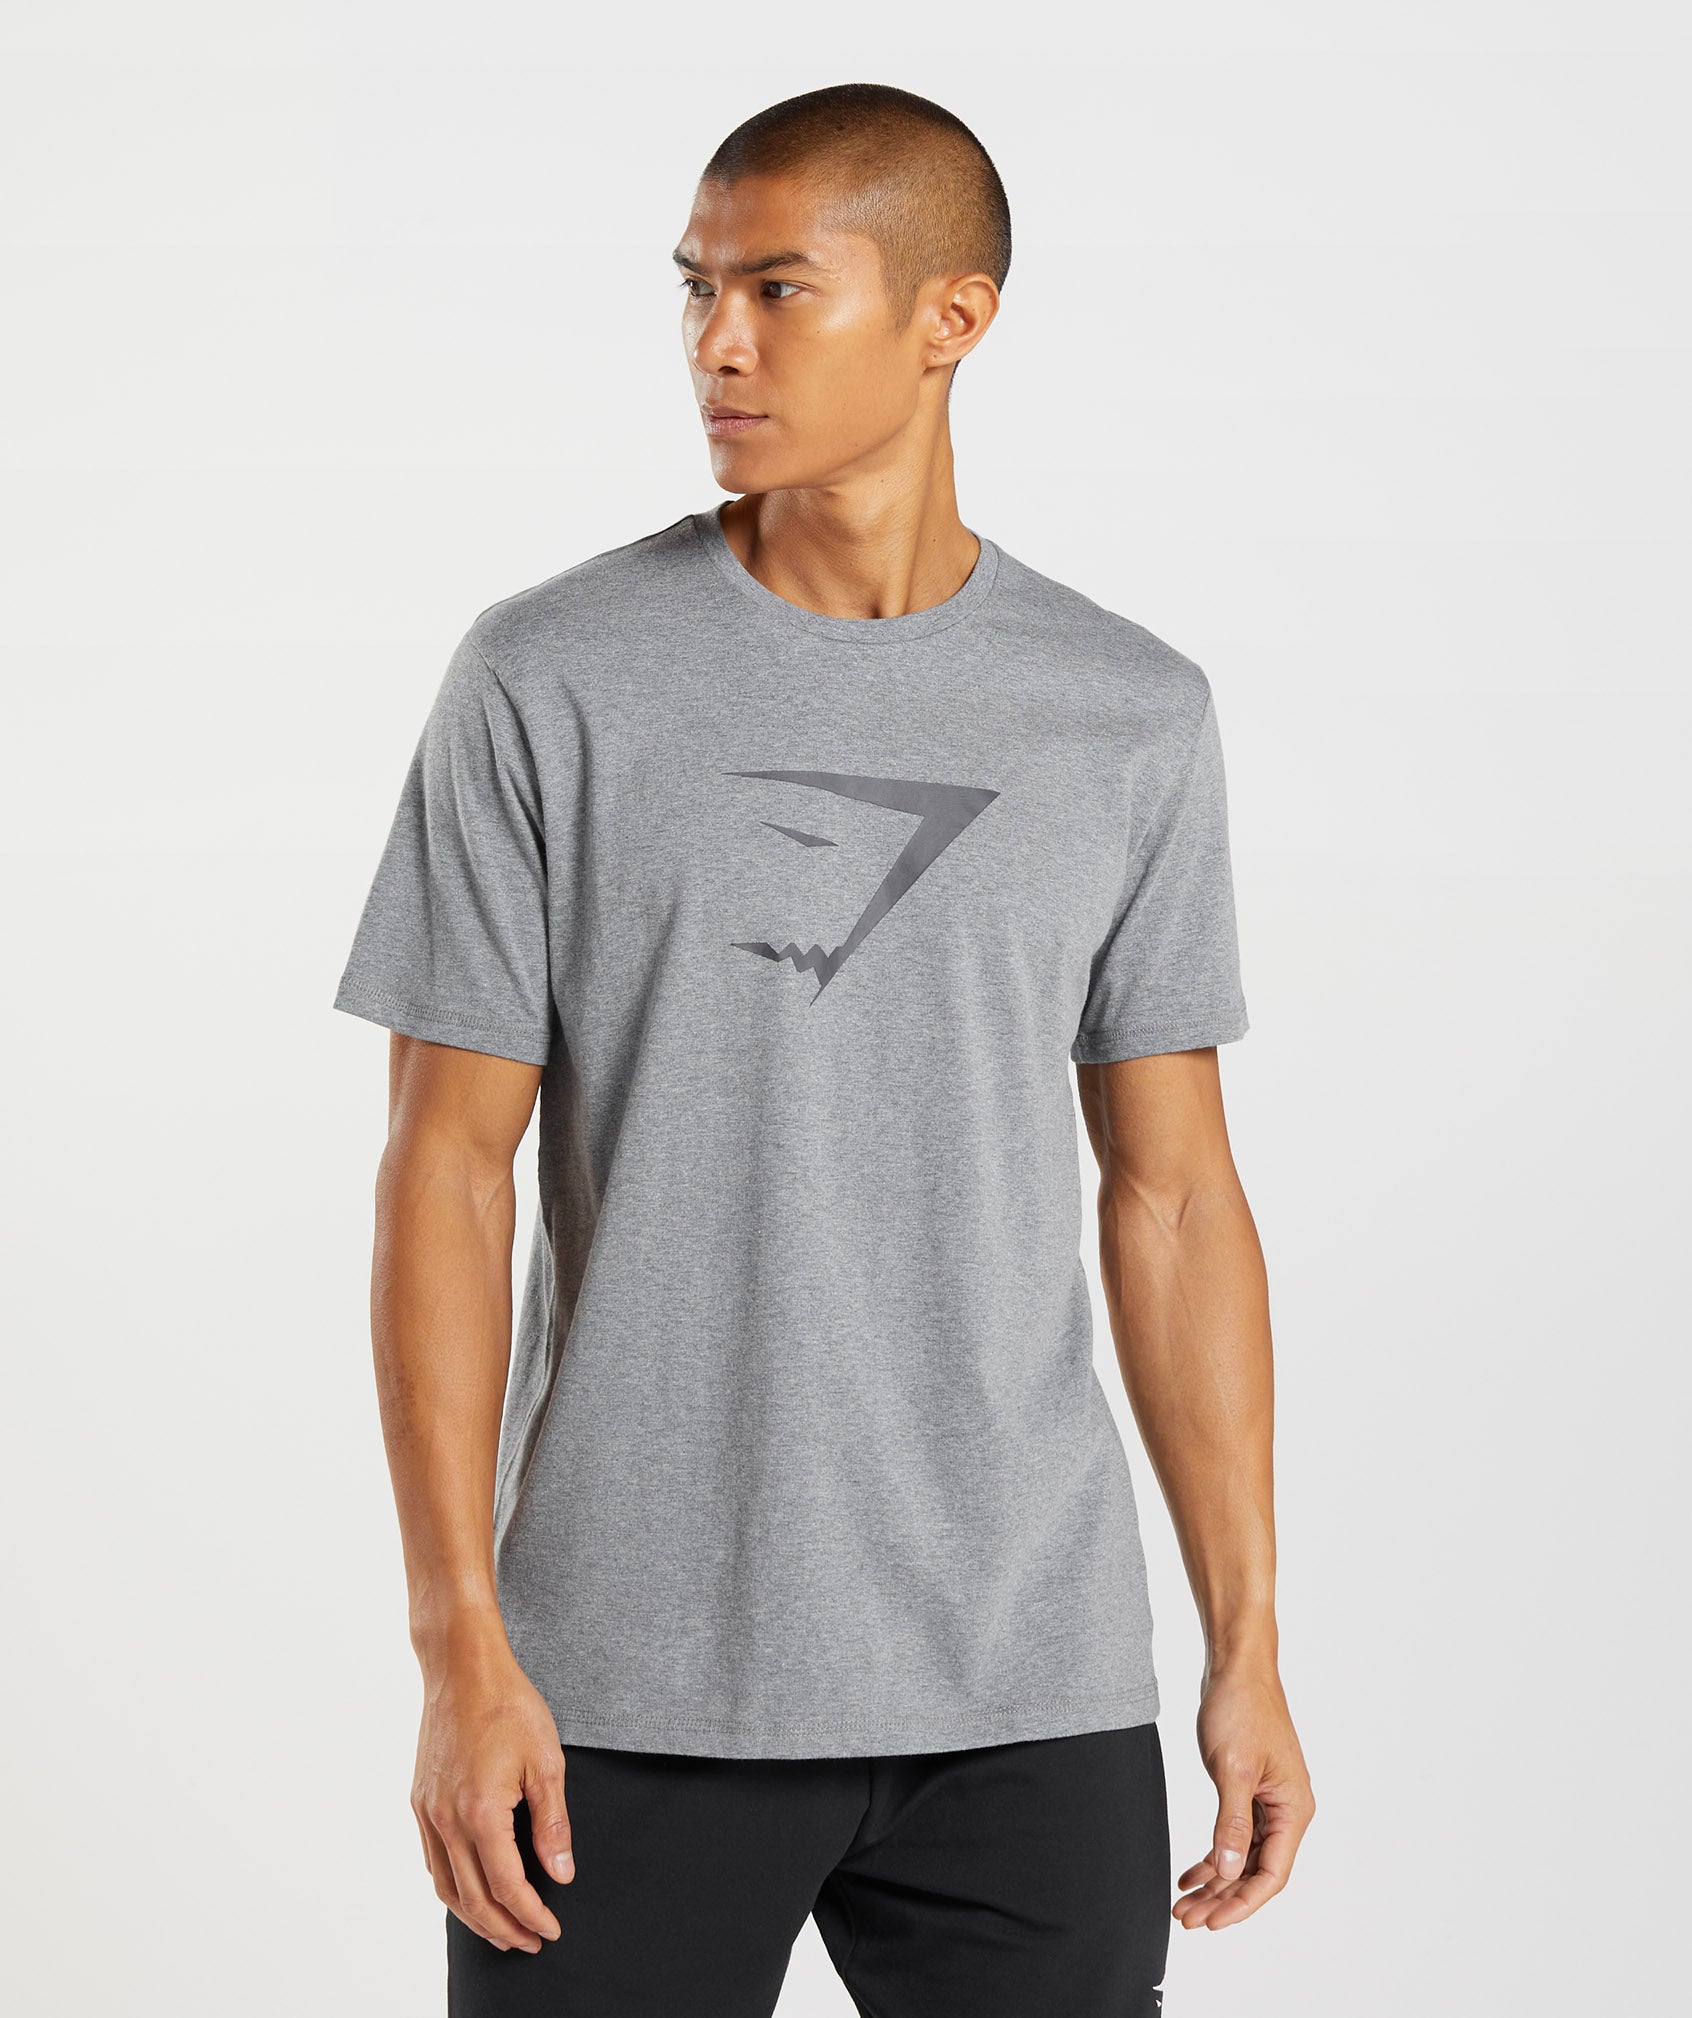 Sharkhead Infill T-Shirt in Charcoal Grey Marl - view 1